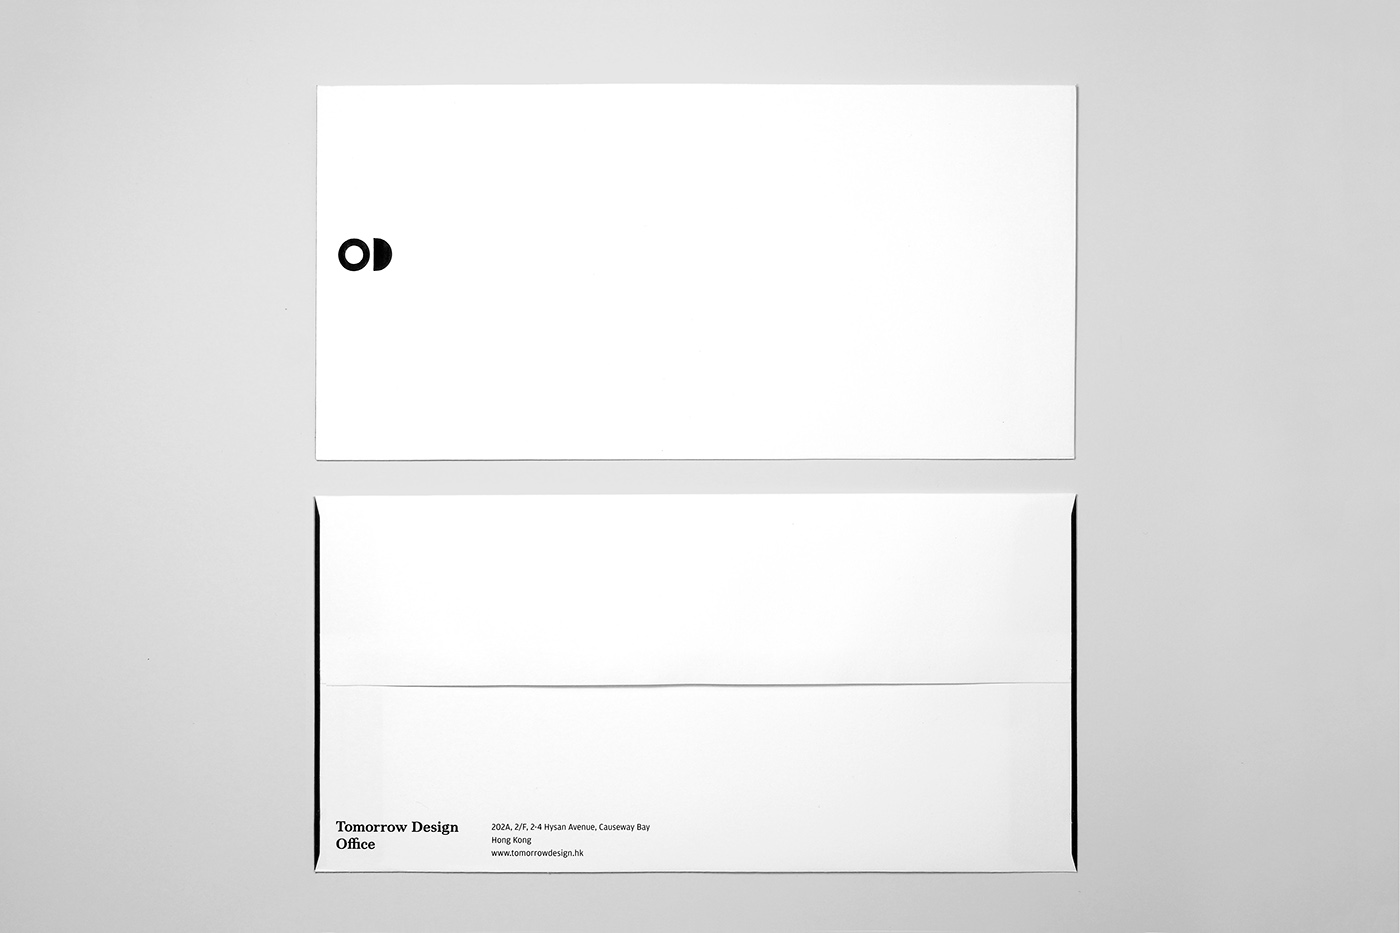 Name card visual identity branding  Stationery envelope logo bilingual monotone minimalist graphic design 